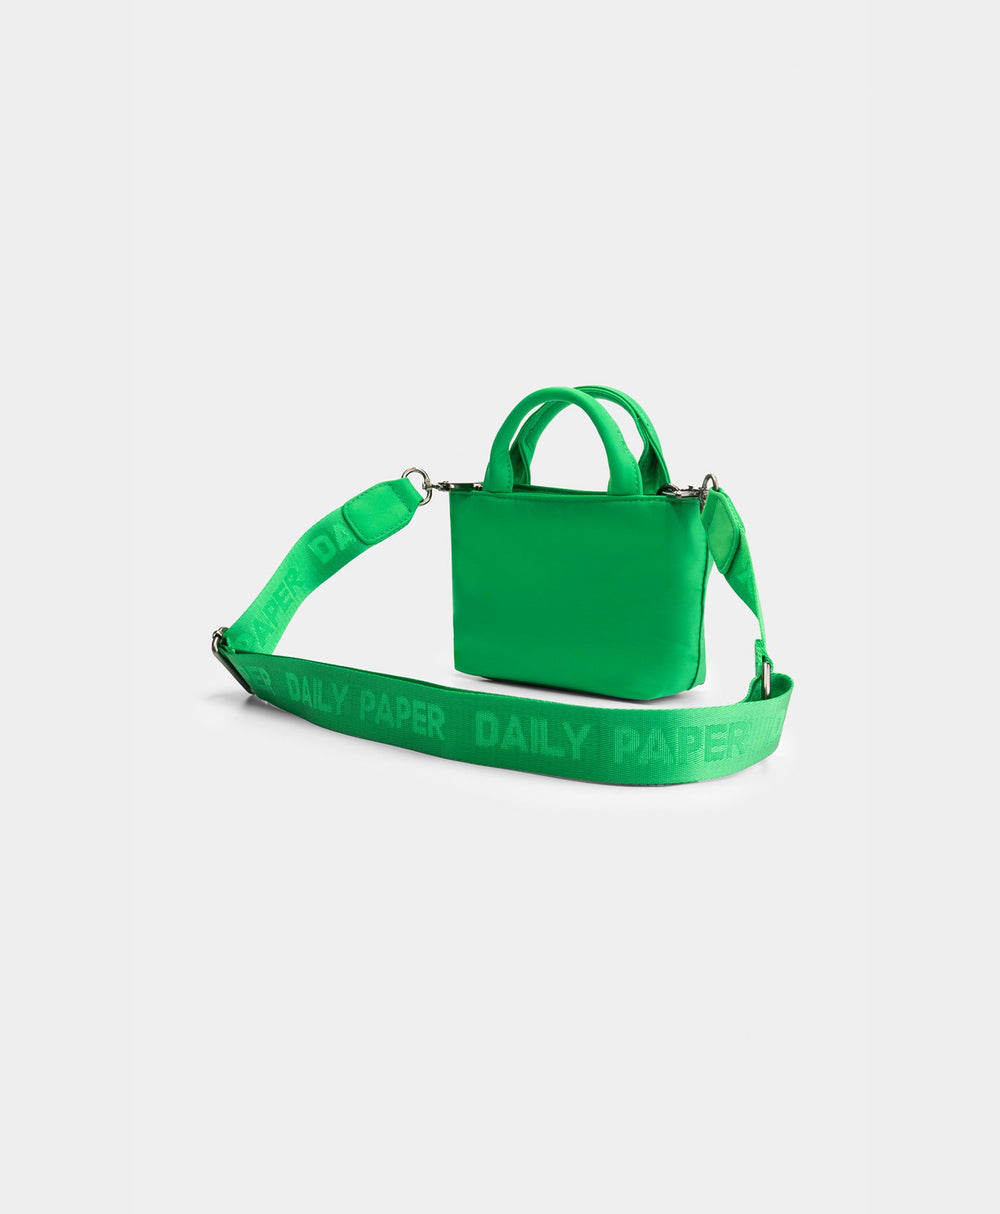 DP - Absinth Green Pianim Bag - Packshot - Rear